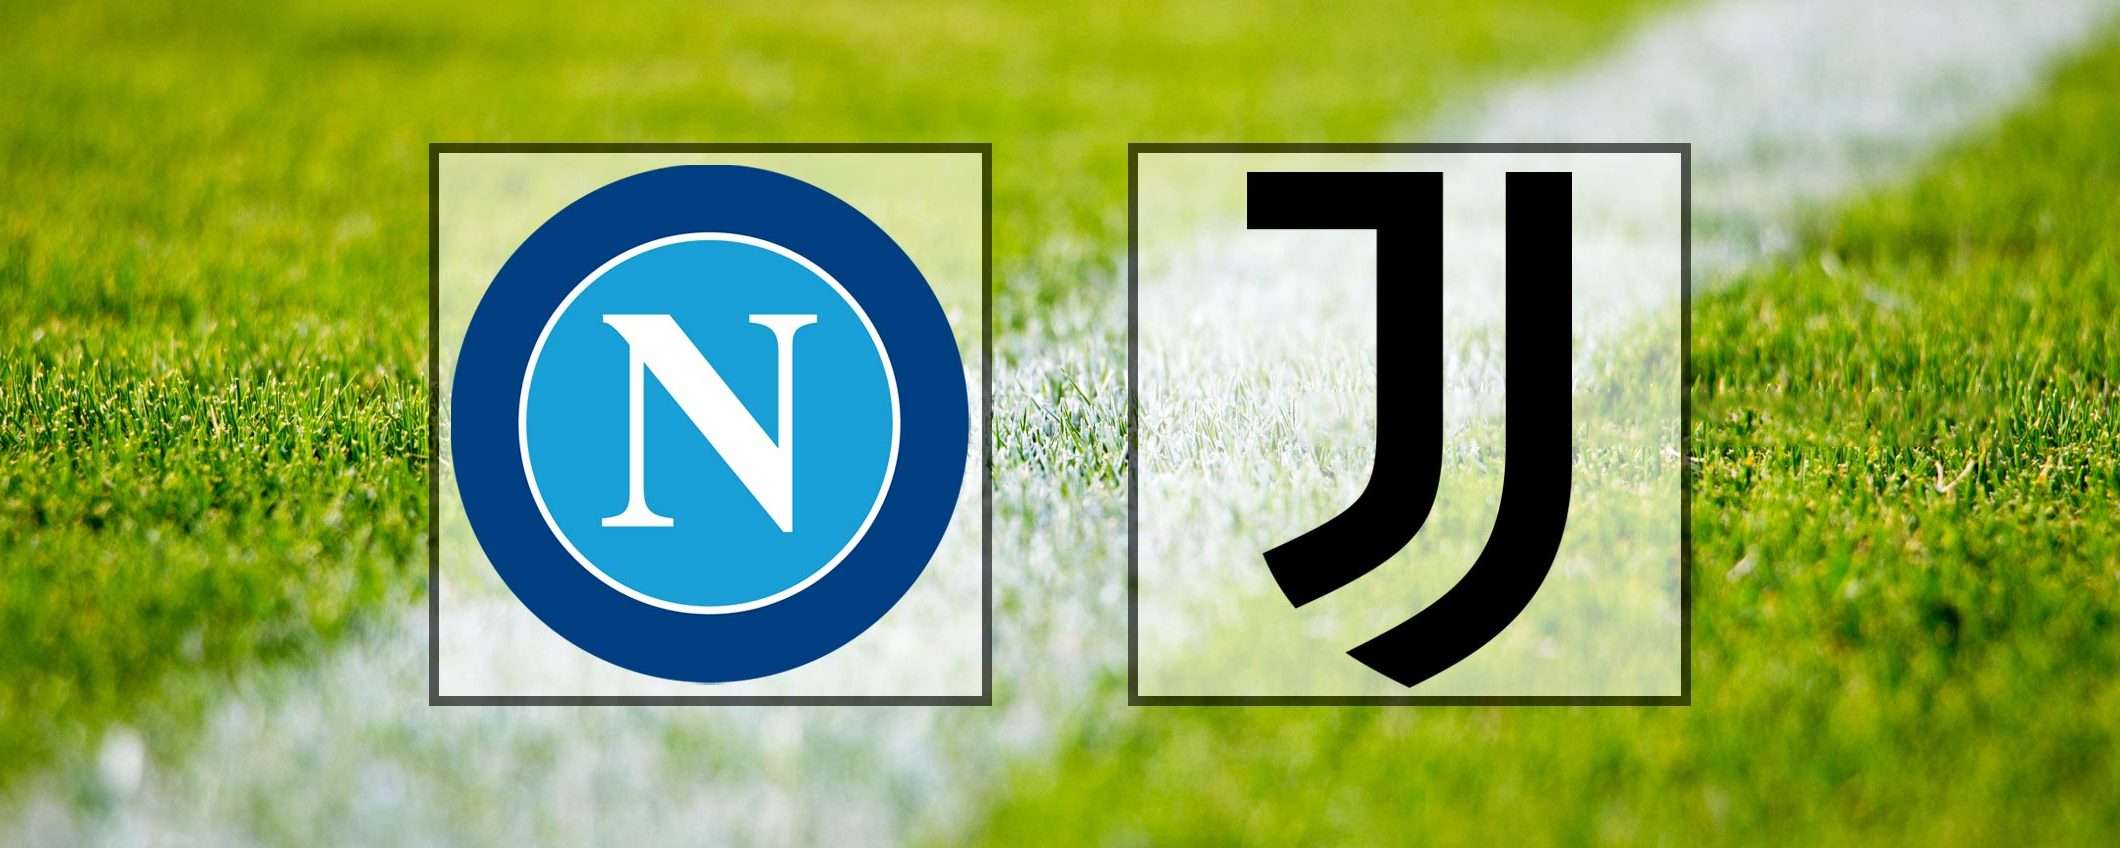 Come vedere Napoli-Juventus in streaming